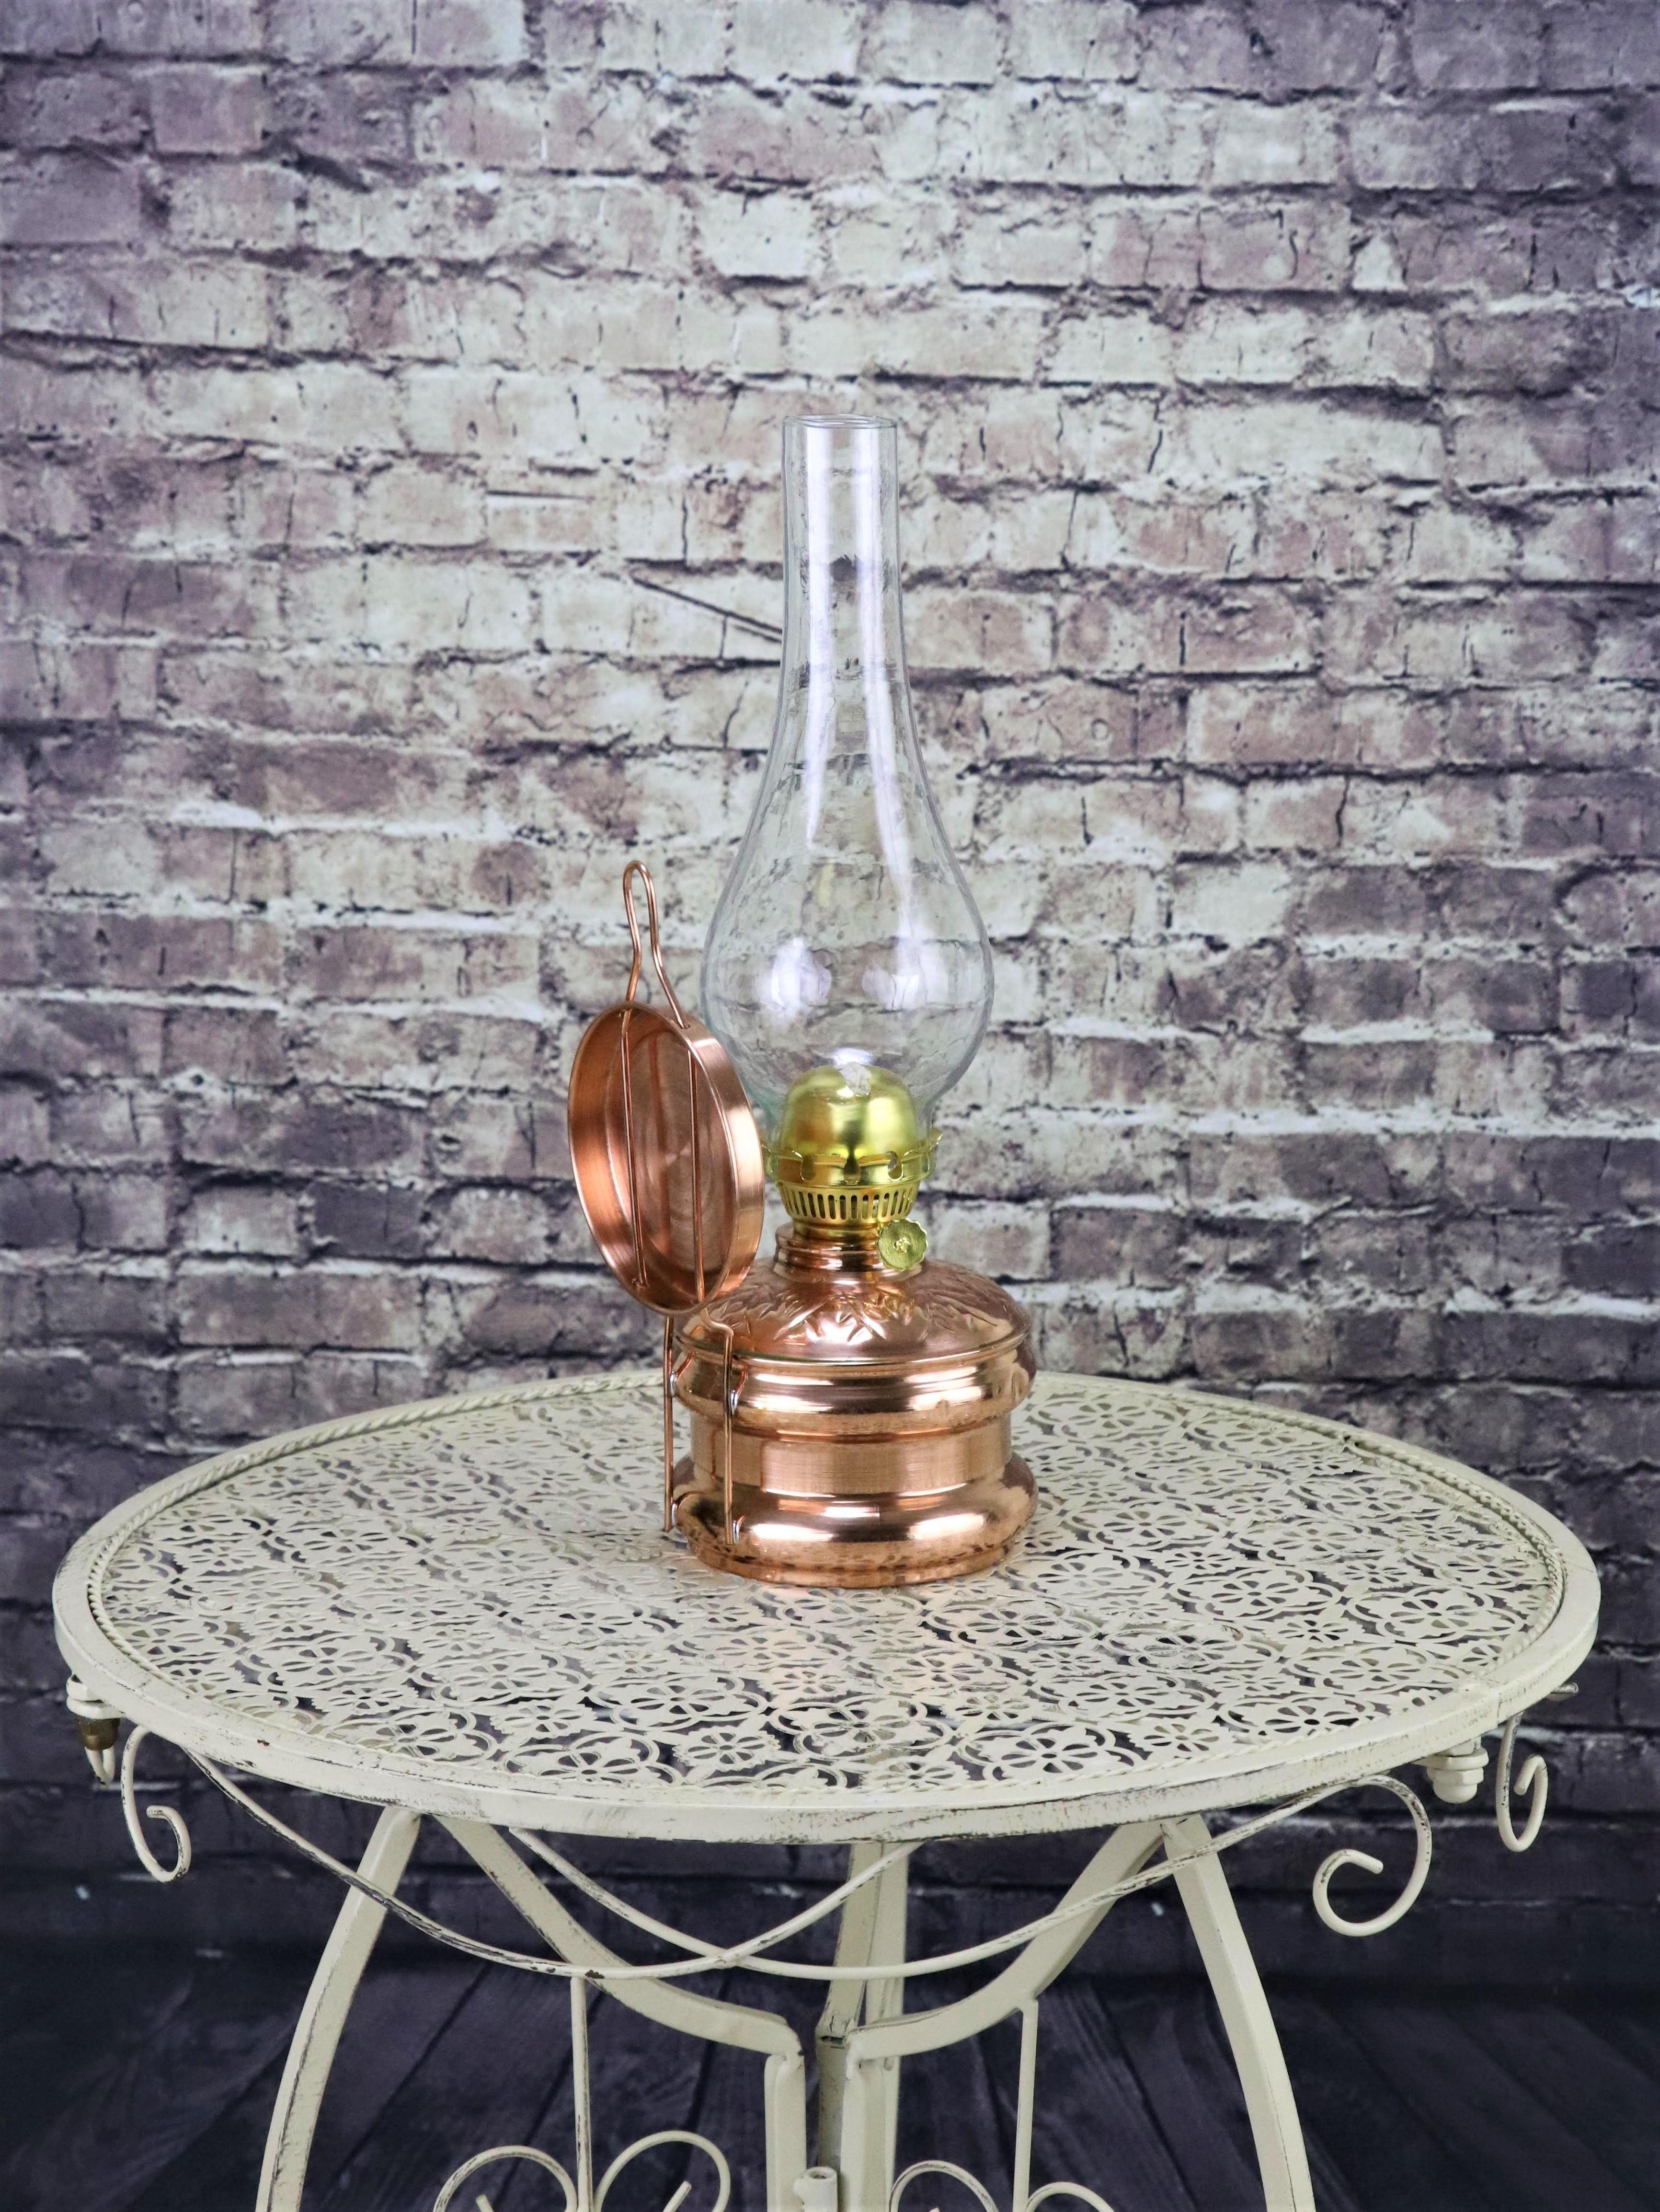 Изображение товара: SONAY медная Классическая медная газовая лампа, медная масляная лампа, декоративная настольная лампа